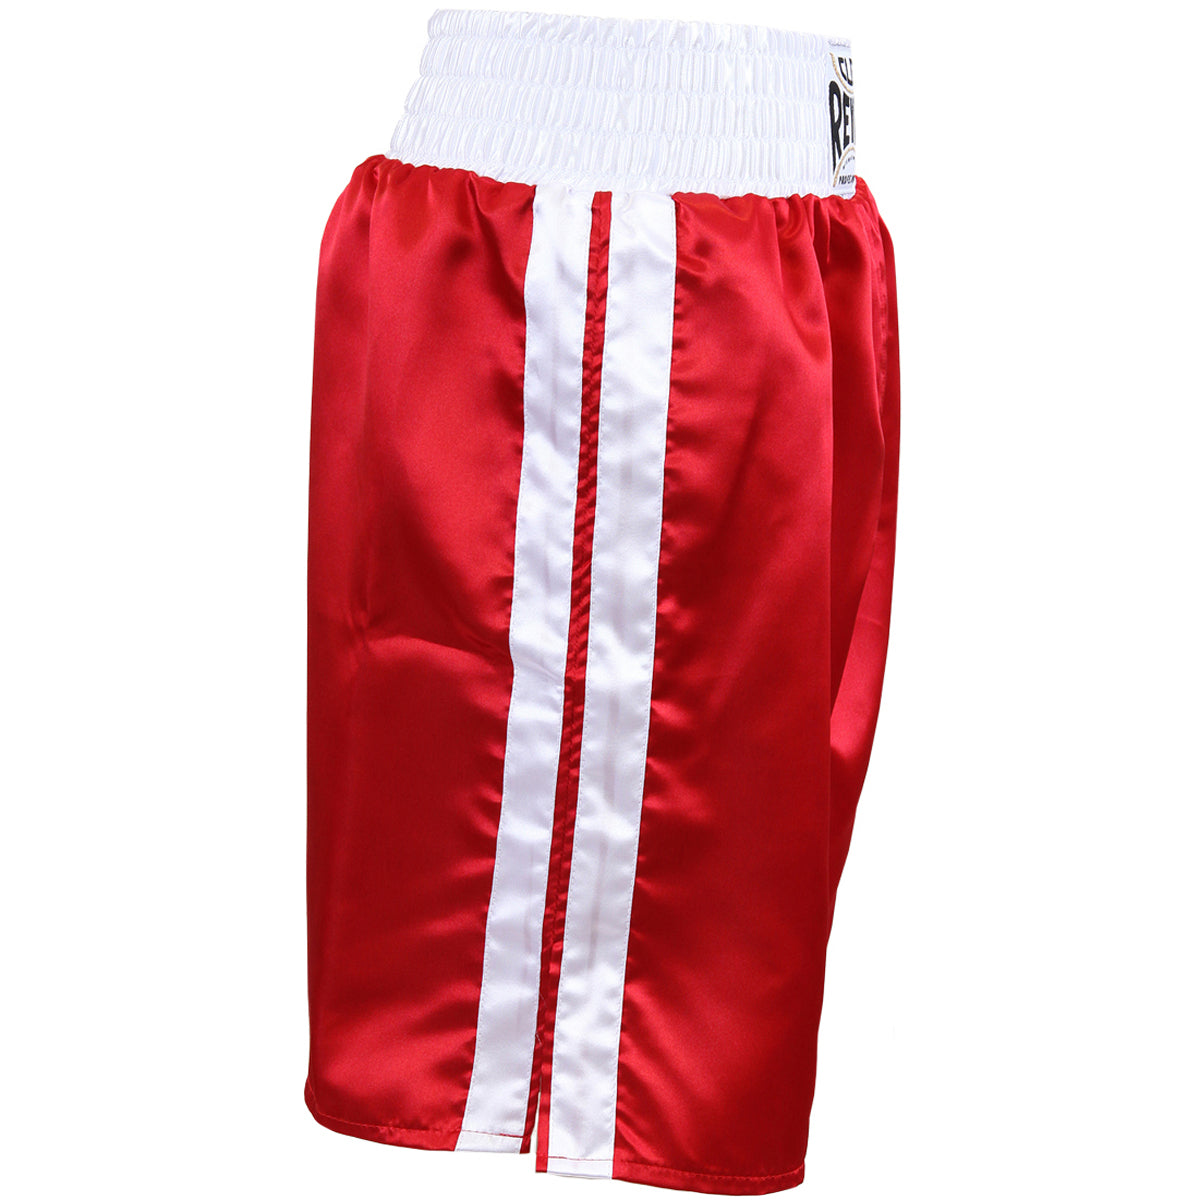 Cleto Reyes Satin Classic Boxing Trunks - Medium (36") - Red/White Cleto Reyes